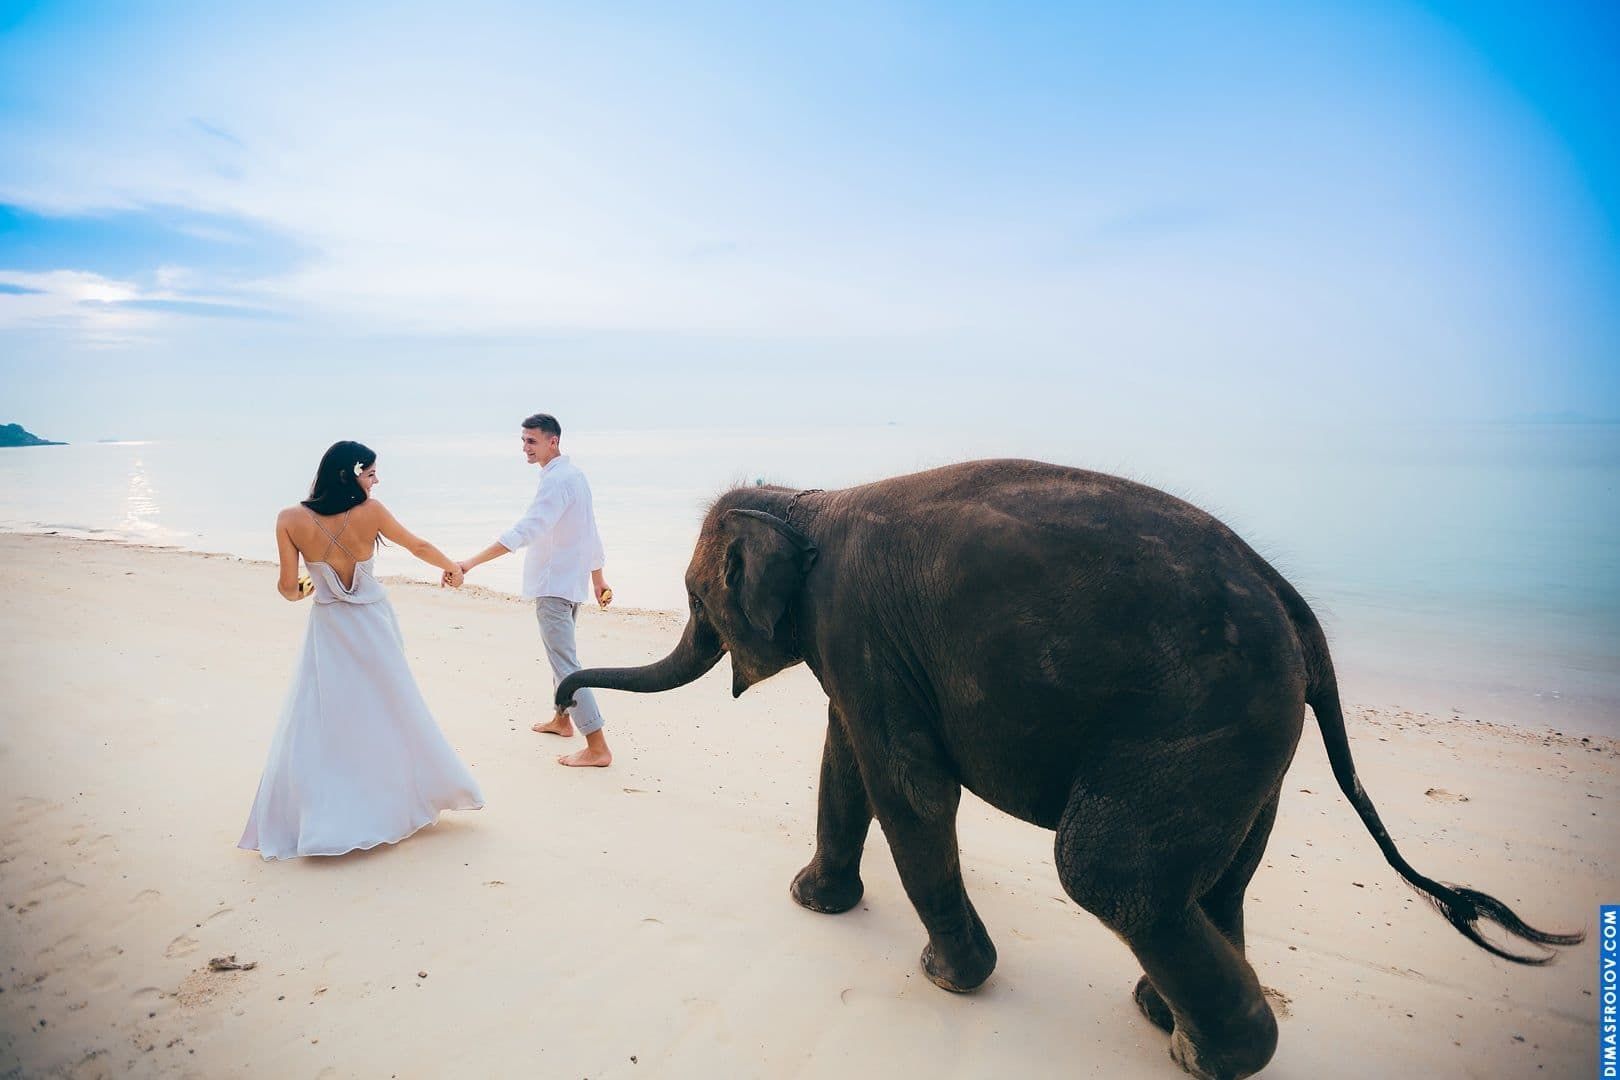 Photo shoot with an elephant on Koh Samui. photographer Dimas Frolov. photo1740